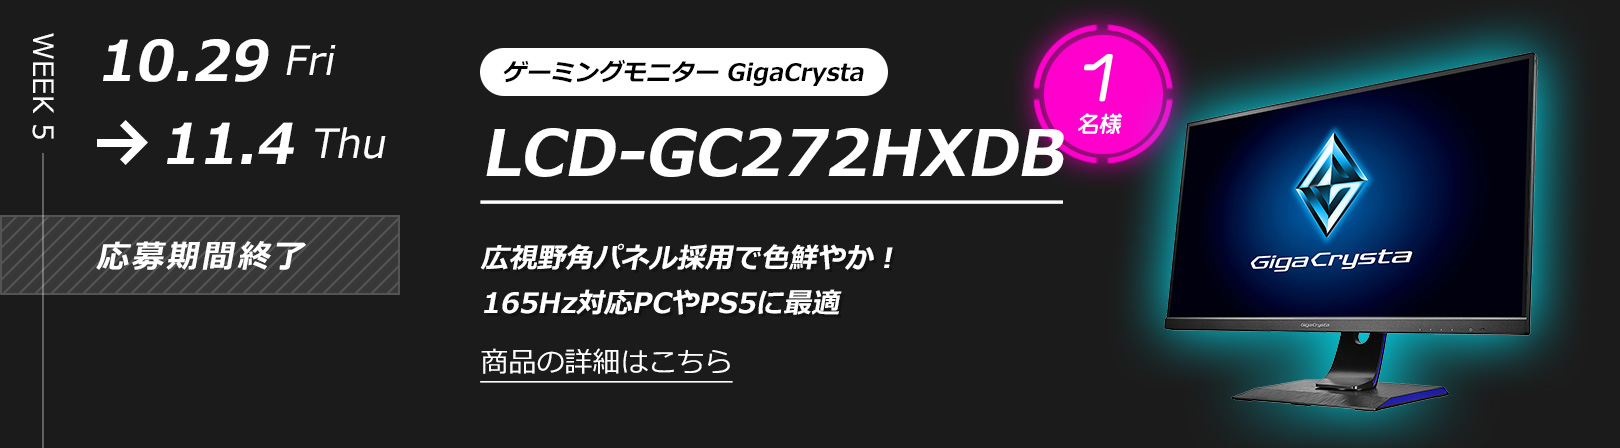 WEEK 5: ゲーミングモニター GigaCrysta LCD-GC272HXDB